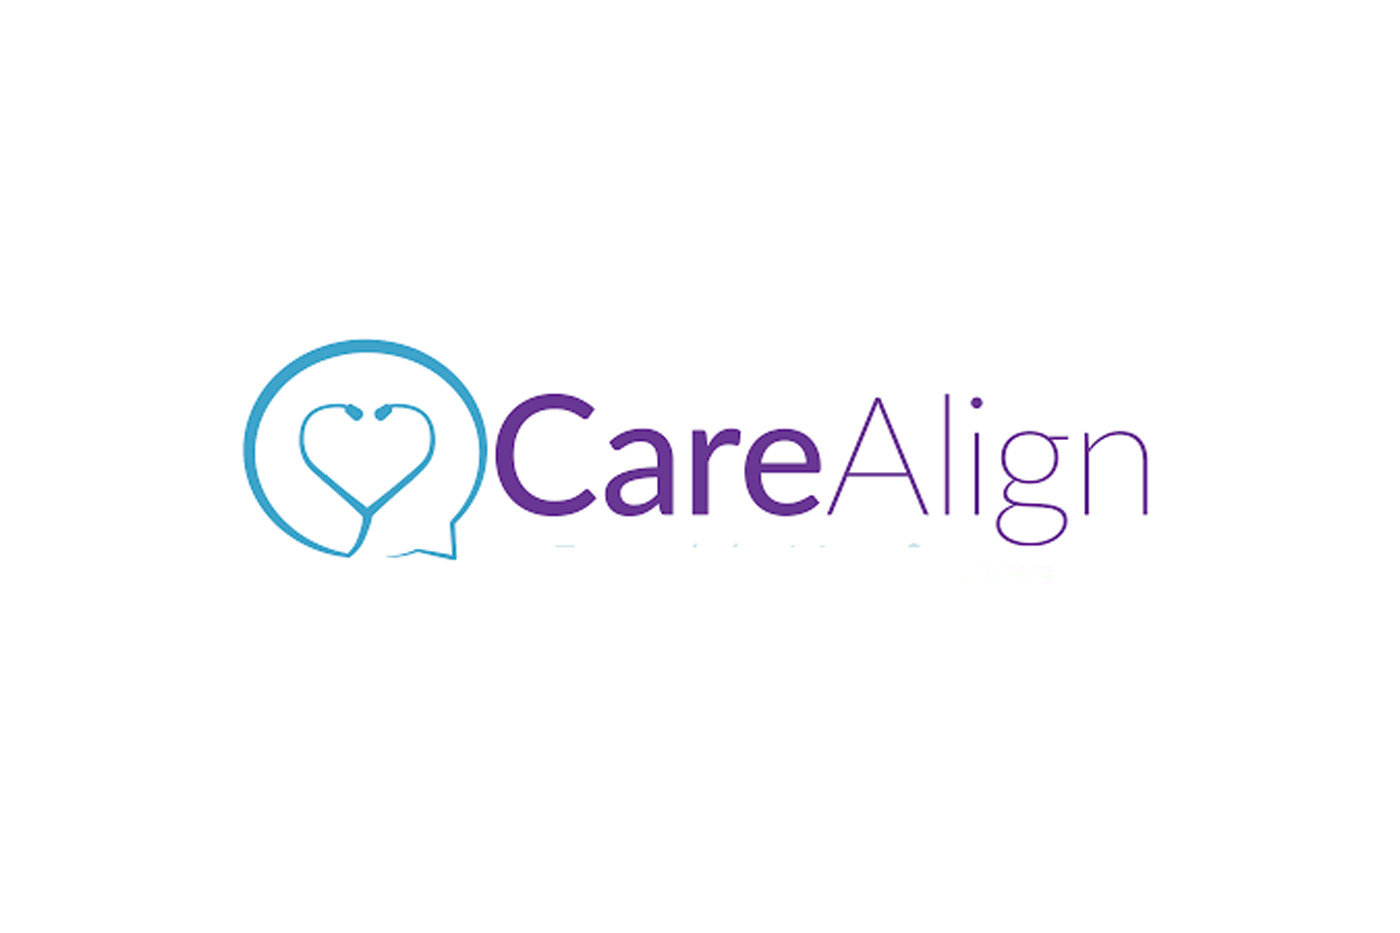 CareAlign logo